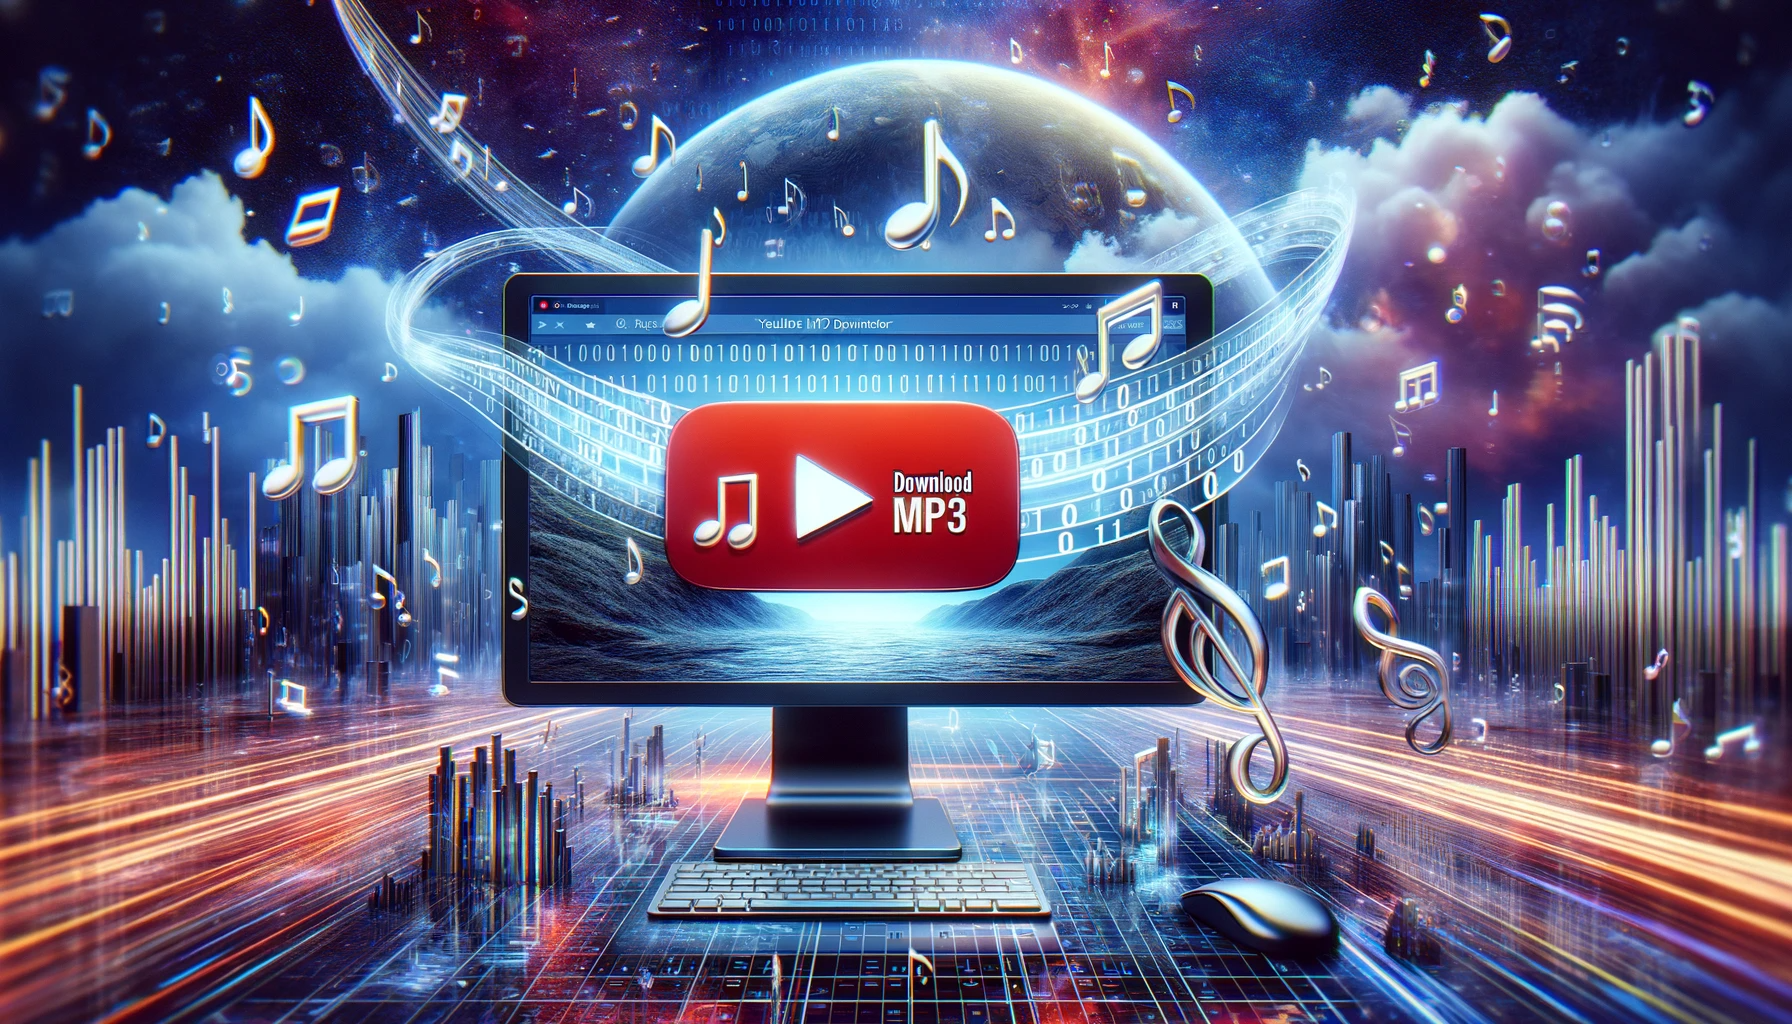 YouTube MP3 Downloader: A Symphony of Digital Alchemy